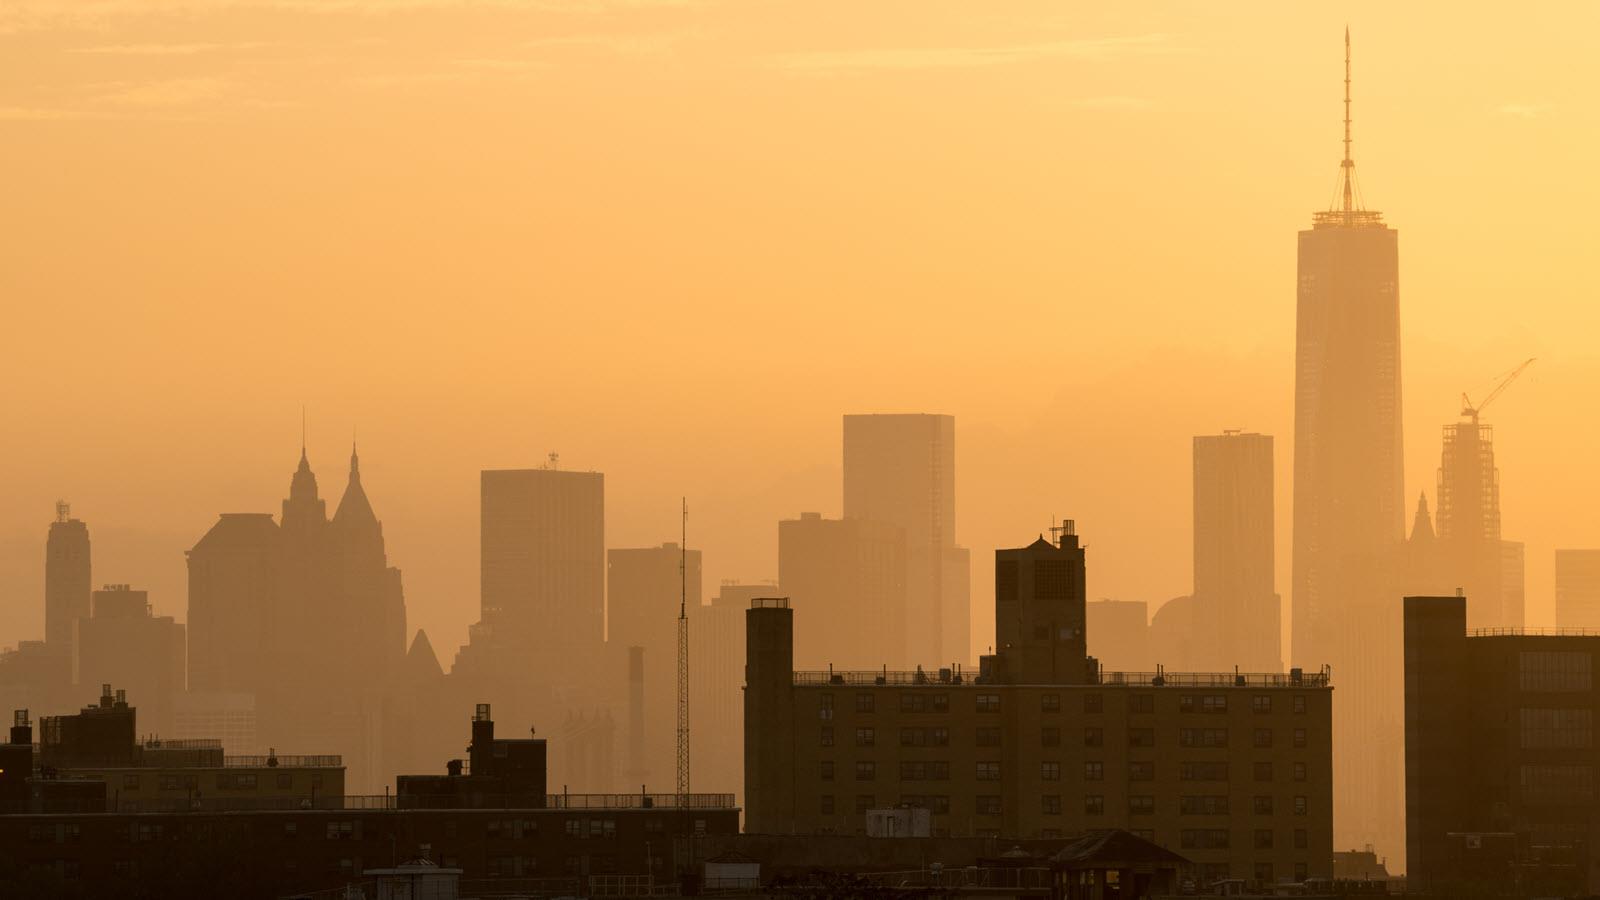 city skyline in a smoggy haze